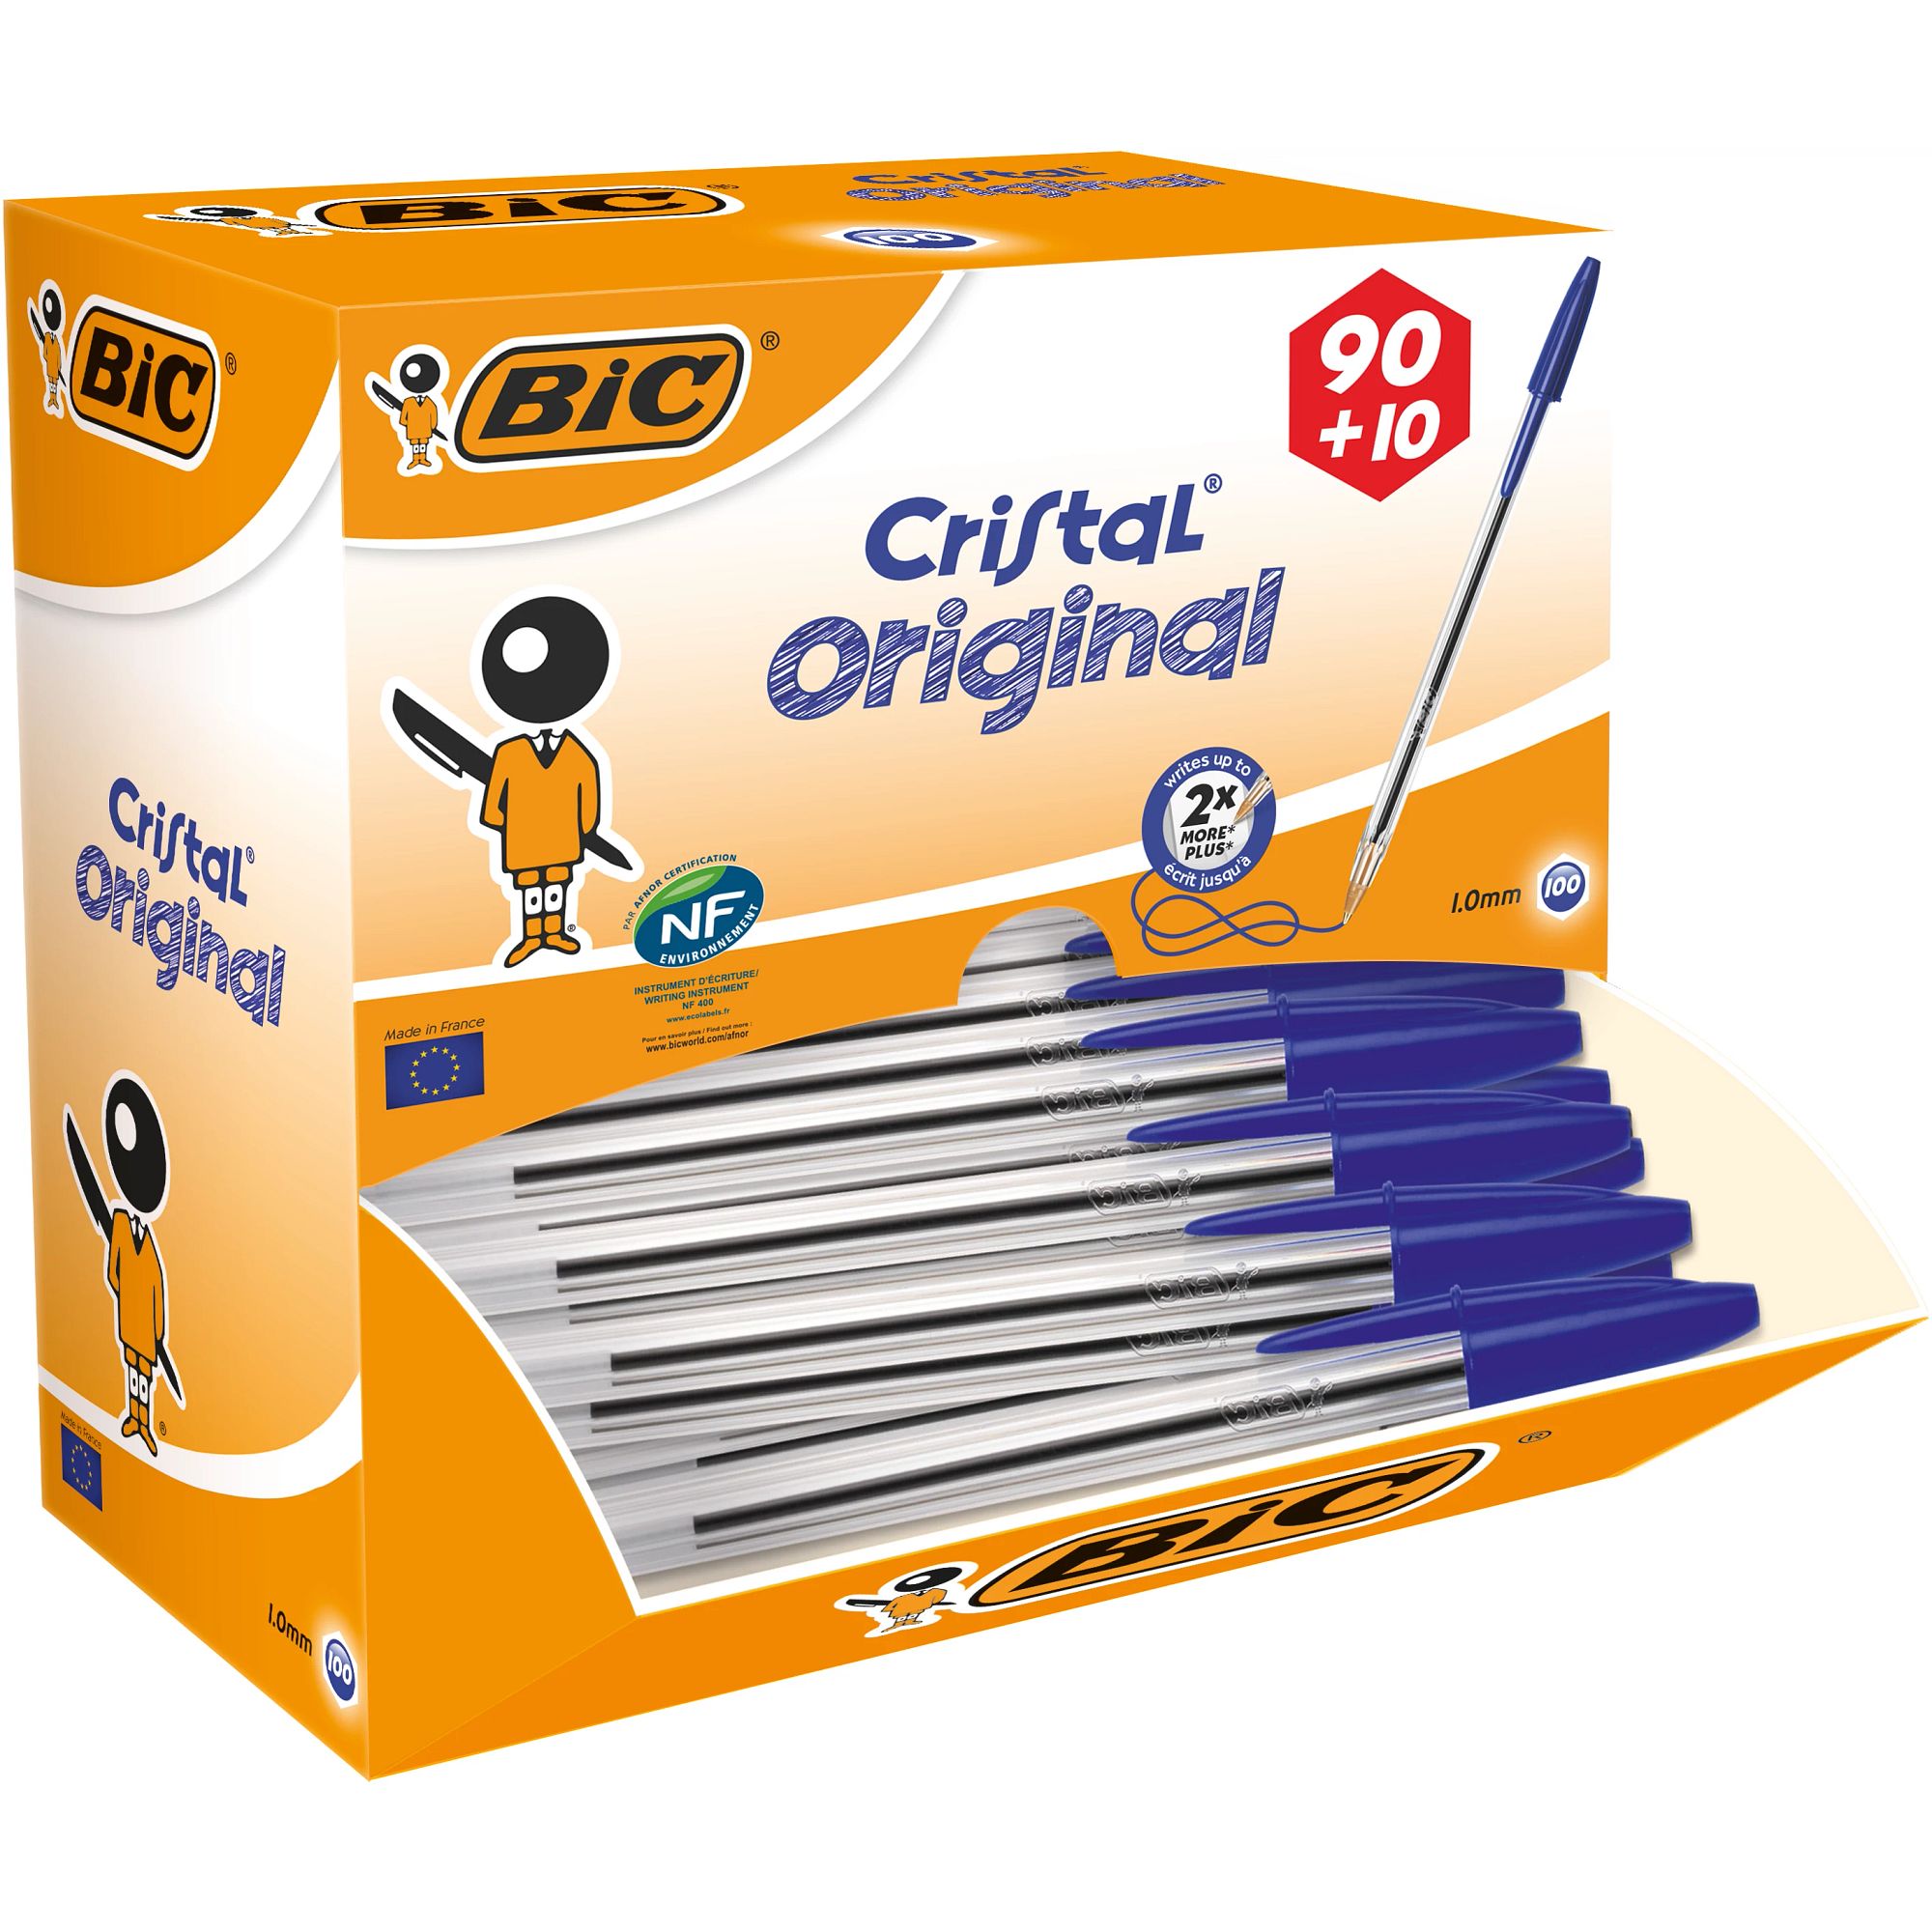 BIC Cristal Ballpoint Pen - Blue - Pack of 90 + 10 Free